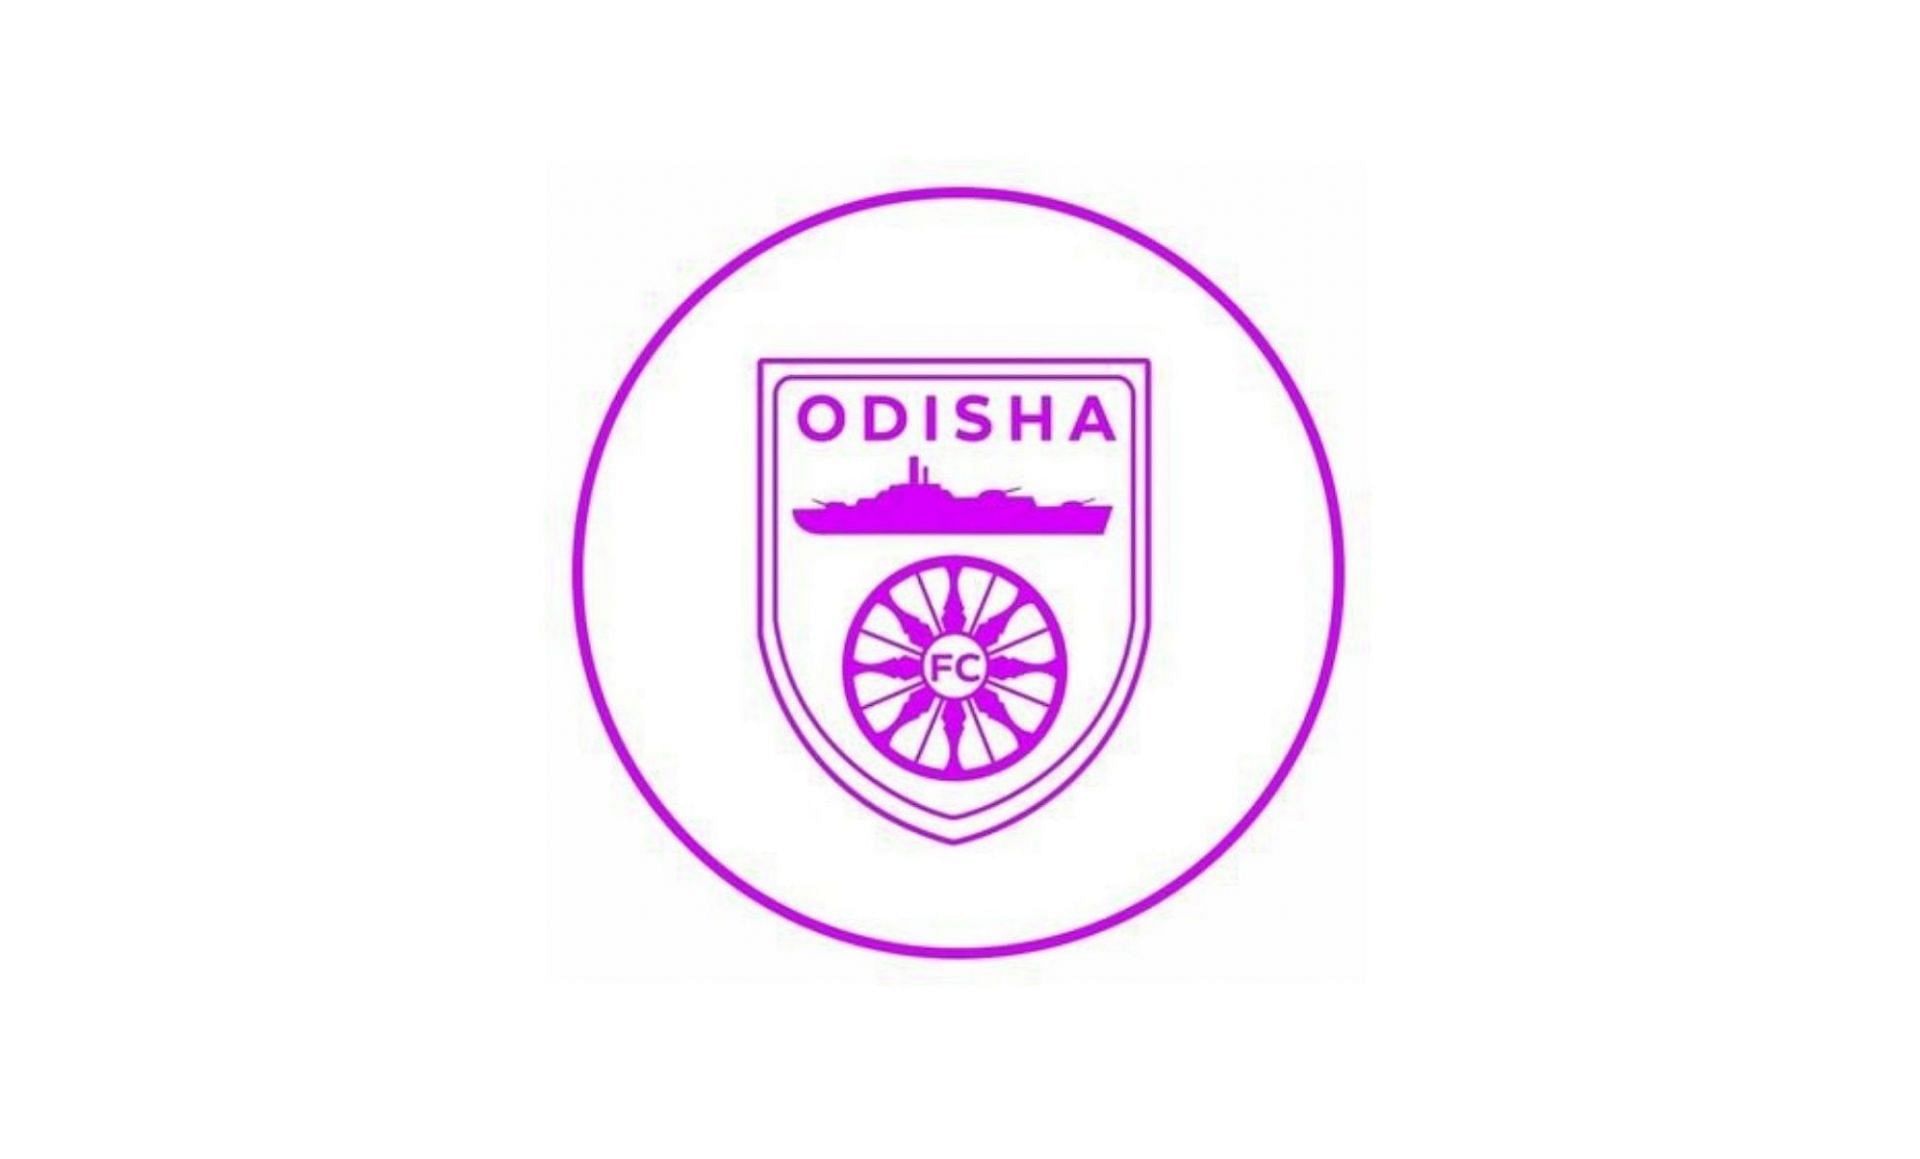 Discover more than 192 odisha fc logo best